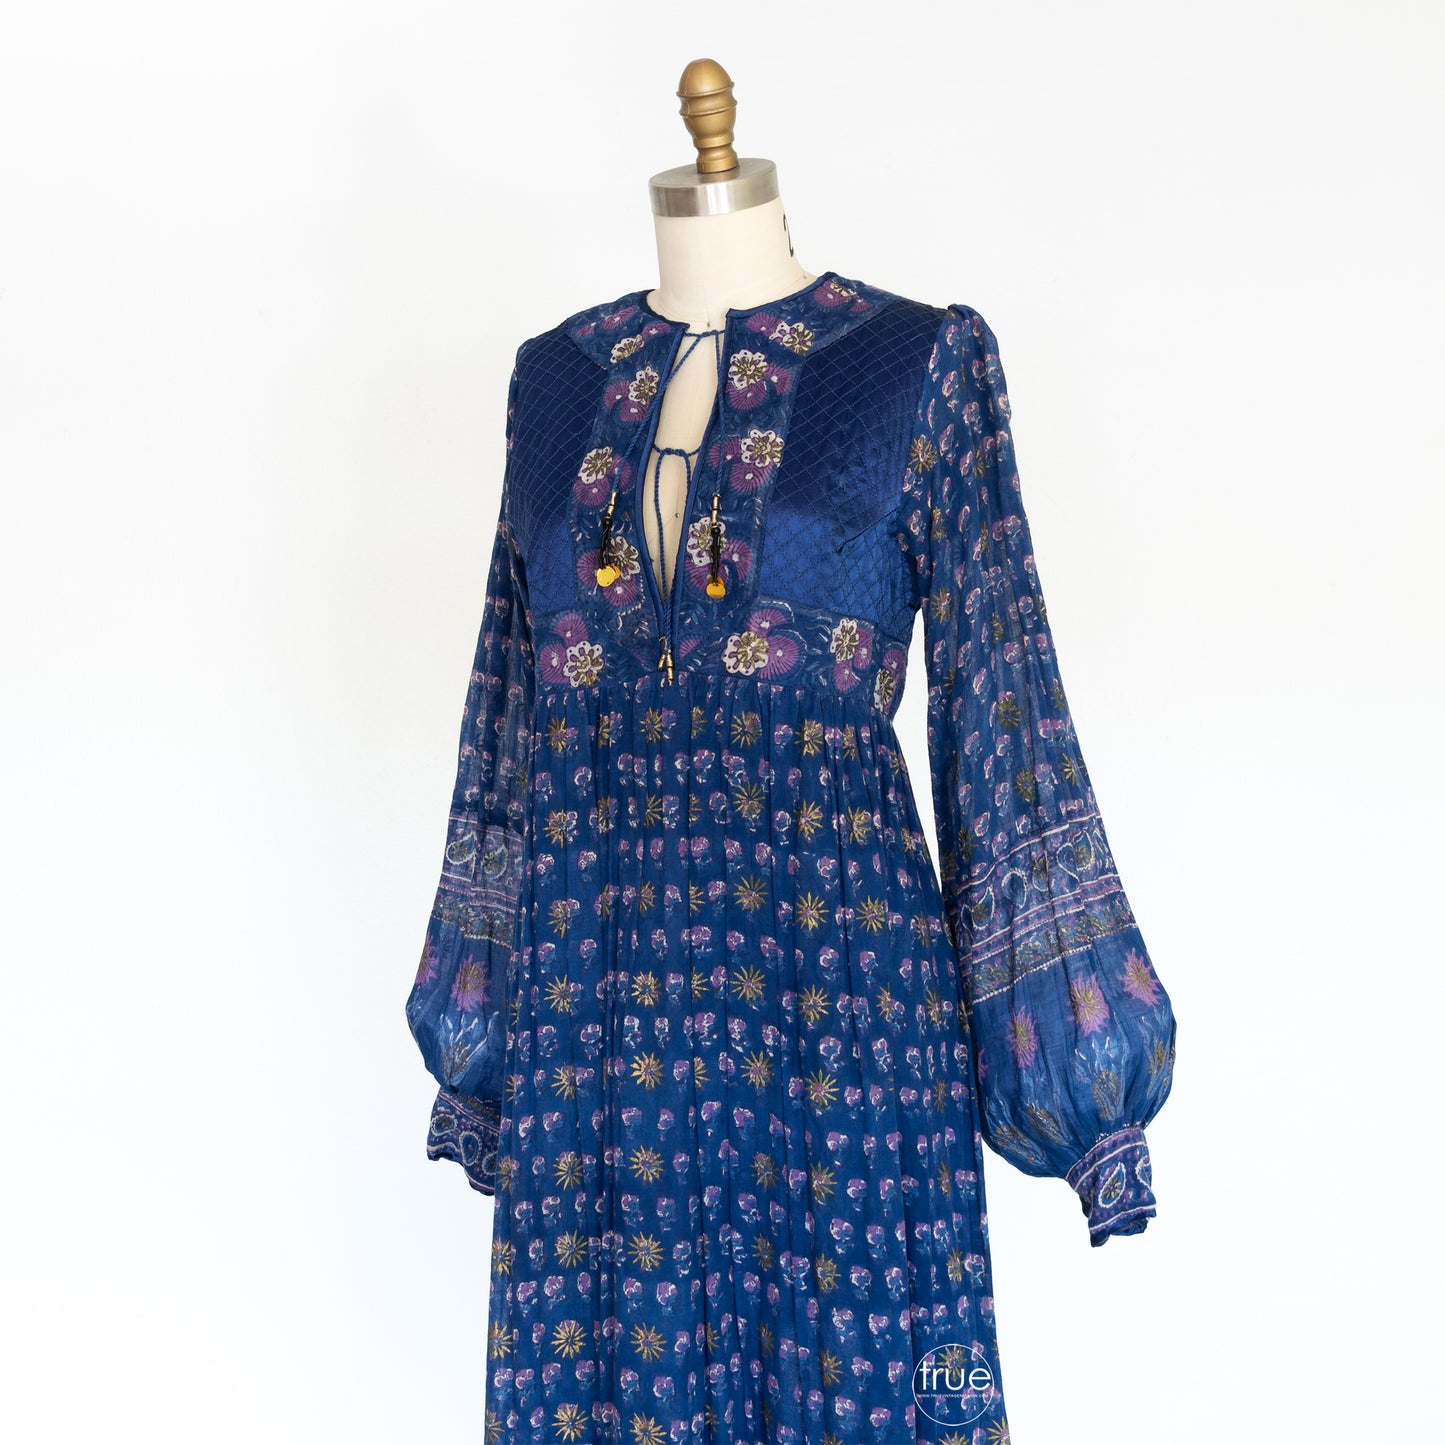 vintage 1970's dress ...exquisite INDIAN COTTON semi-sheer block print w/metallic gold accents dress